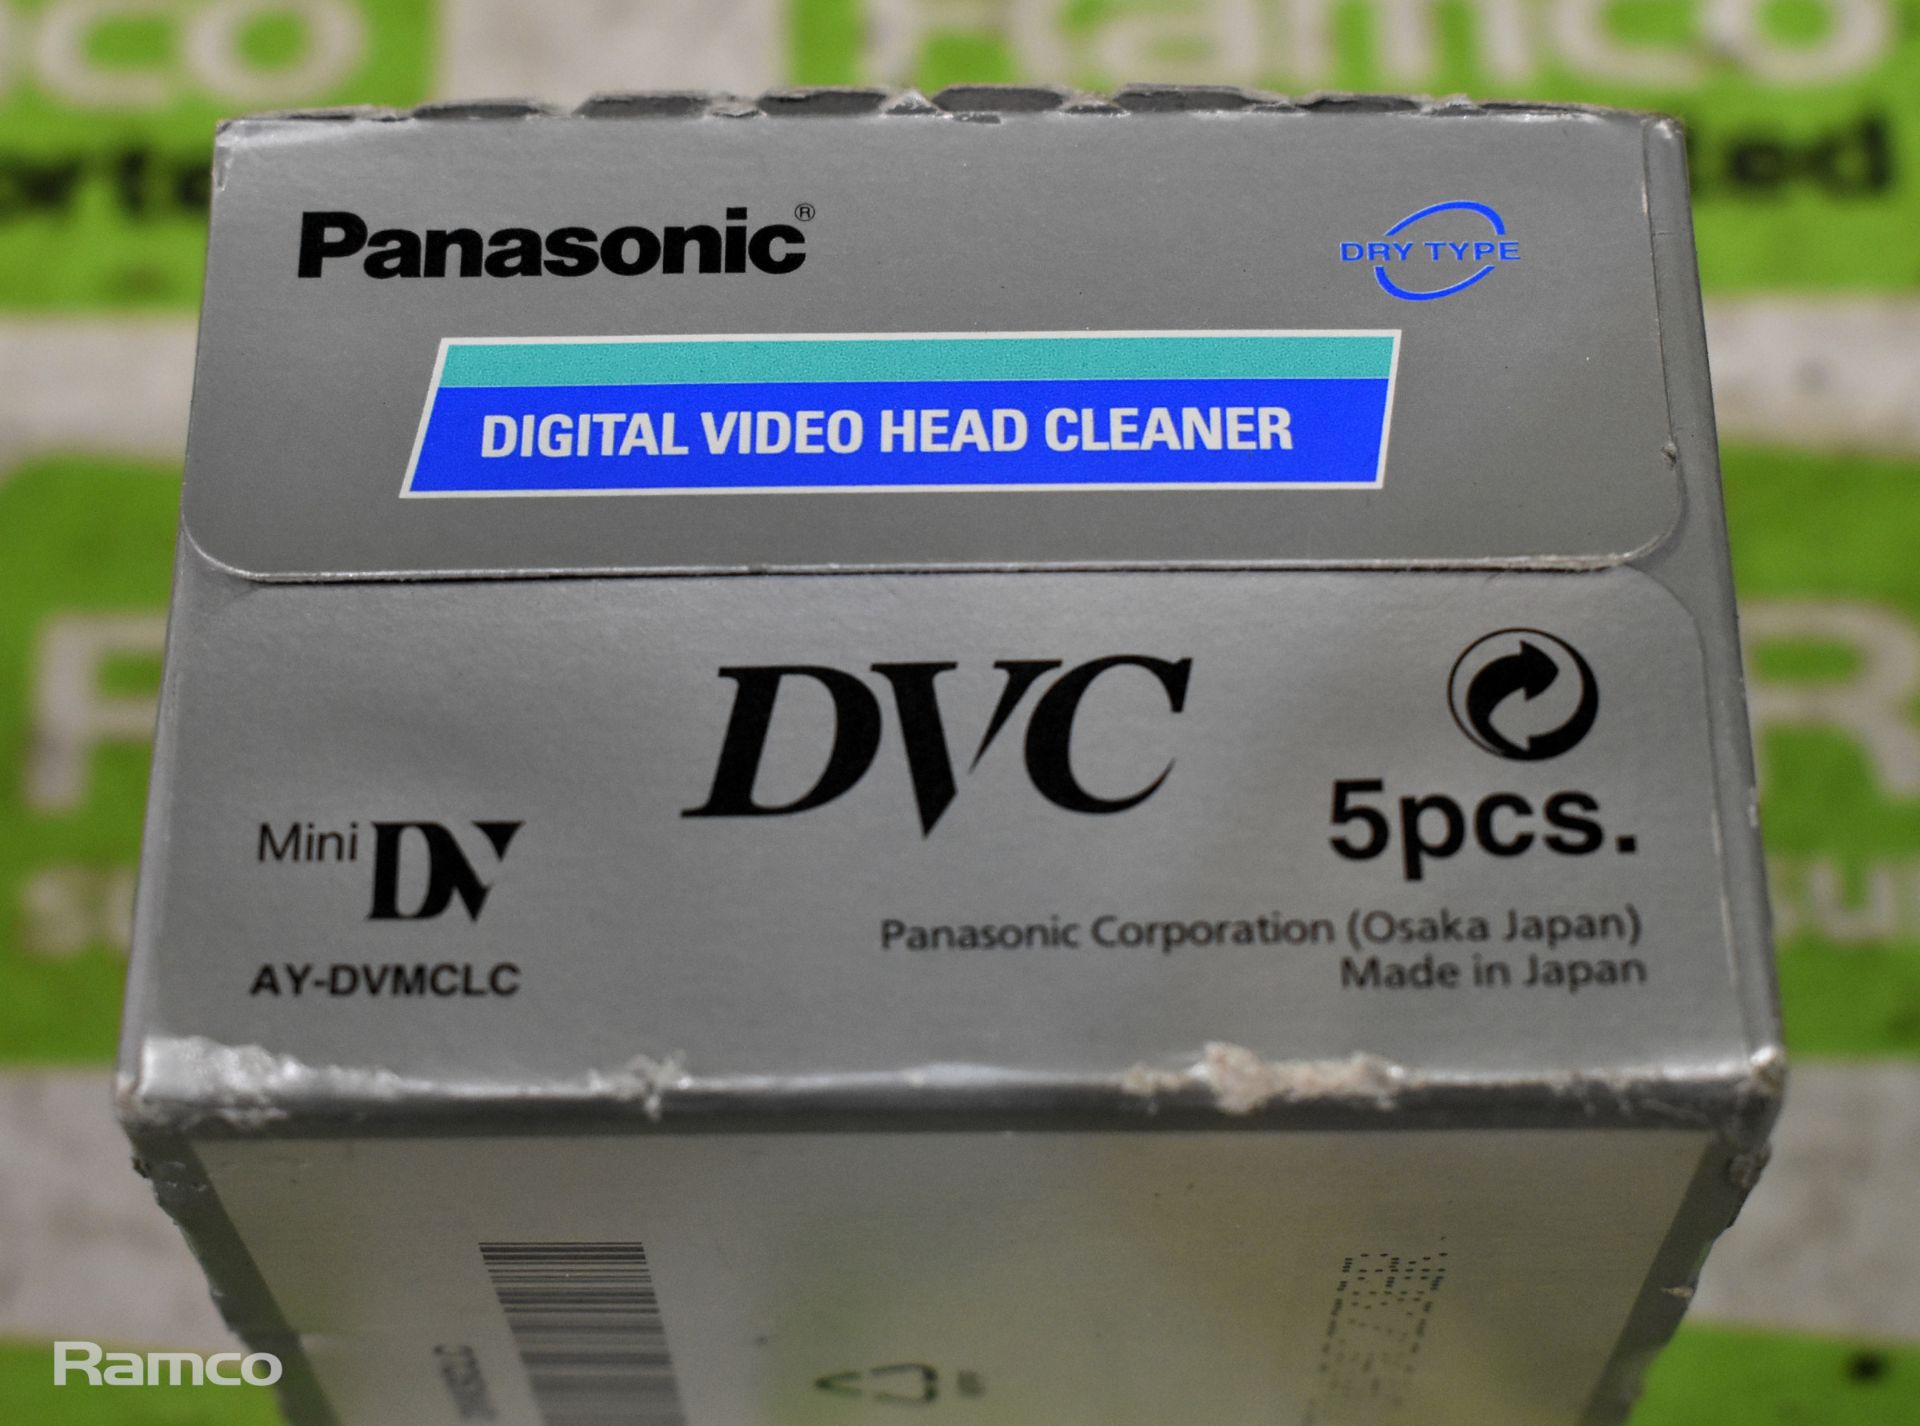 Zebra TLP2844 label printer, 4x boxes of Panasonic DVC digital video head cleaners - 5 units per box - Image 7 of 7